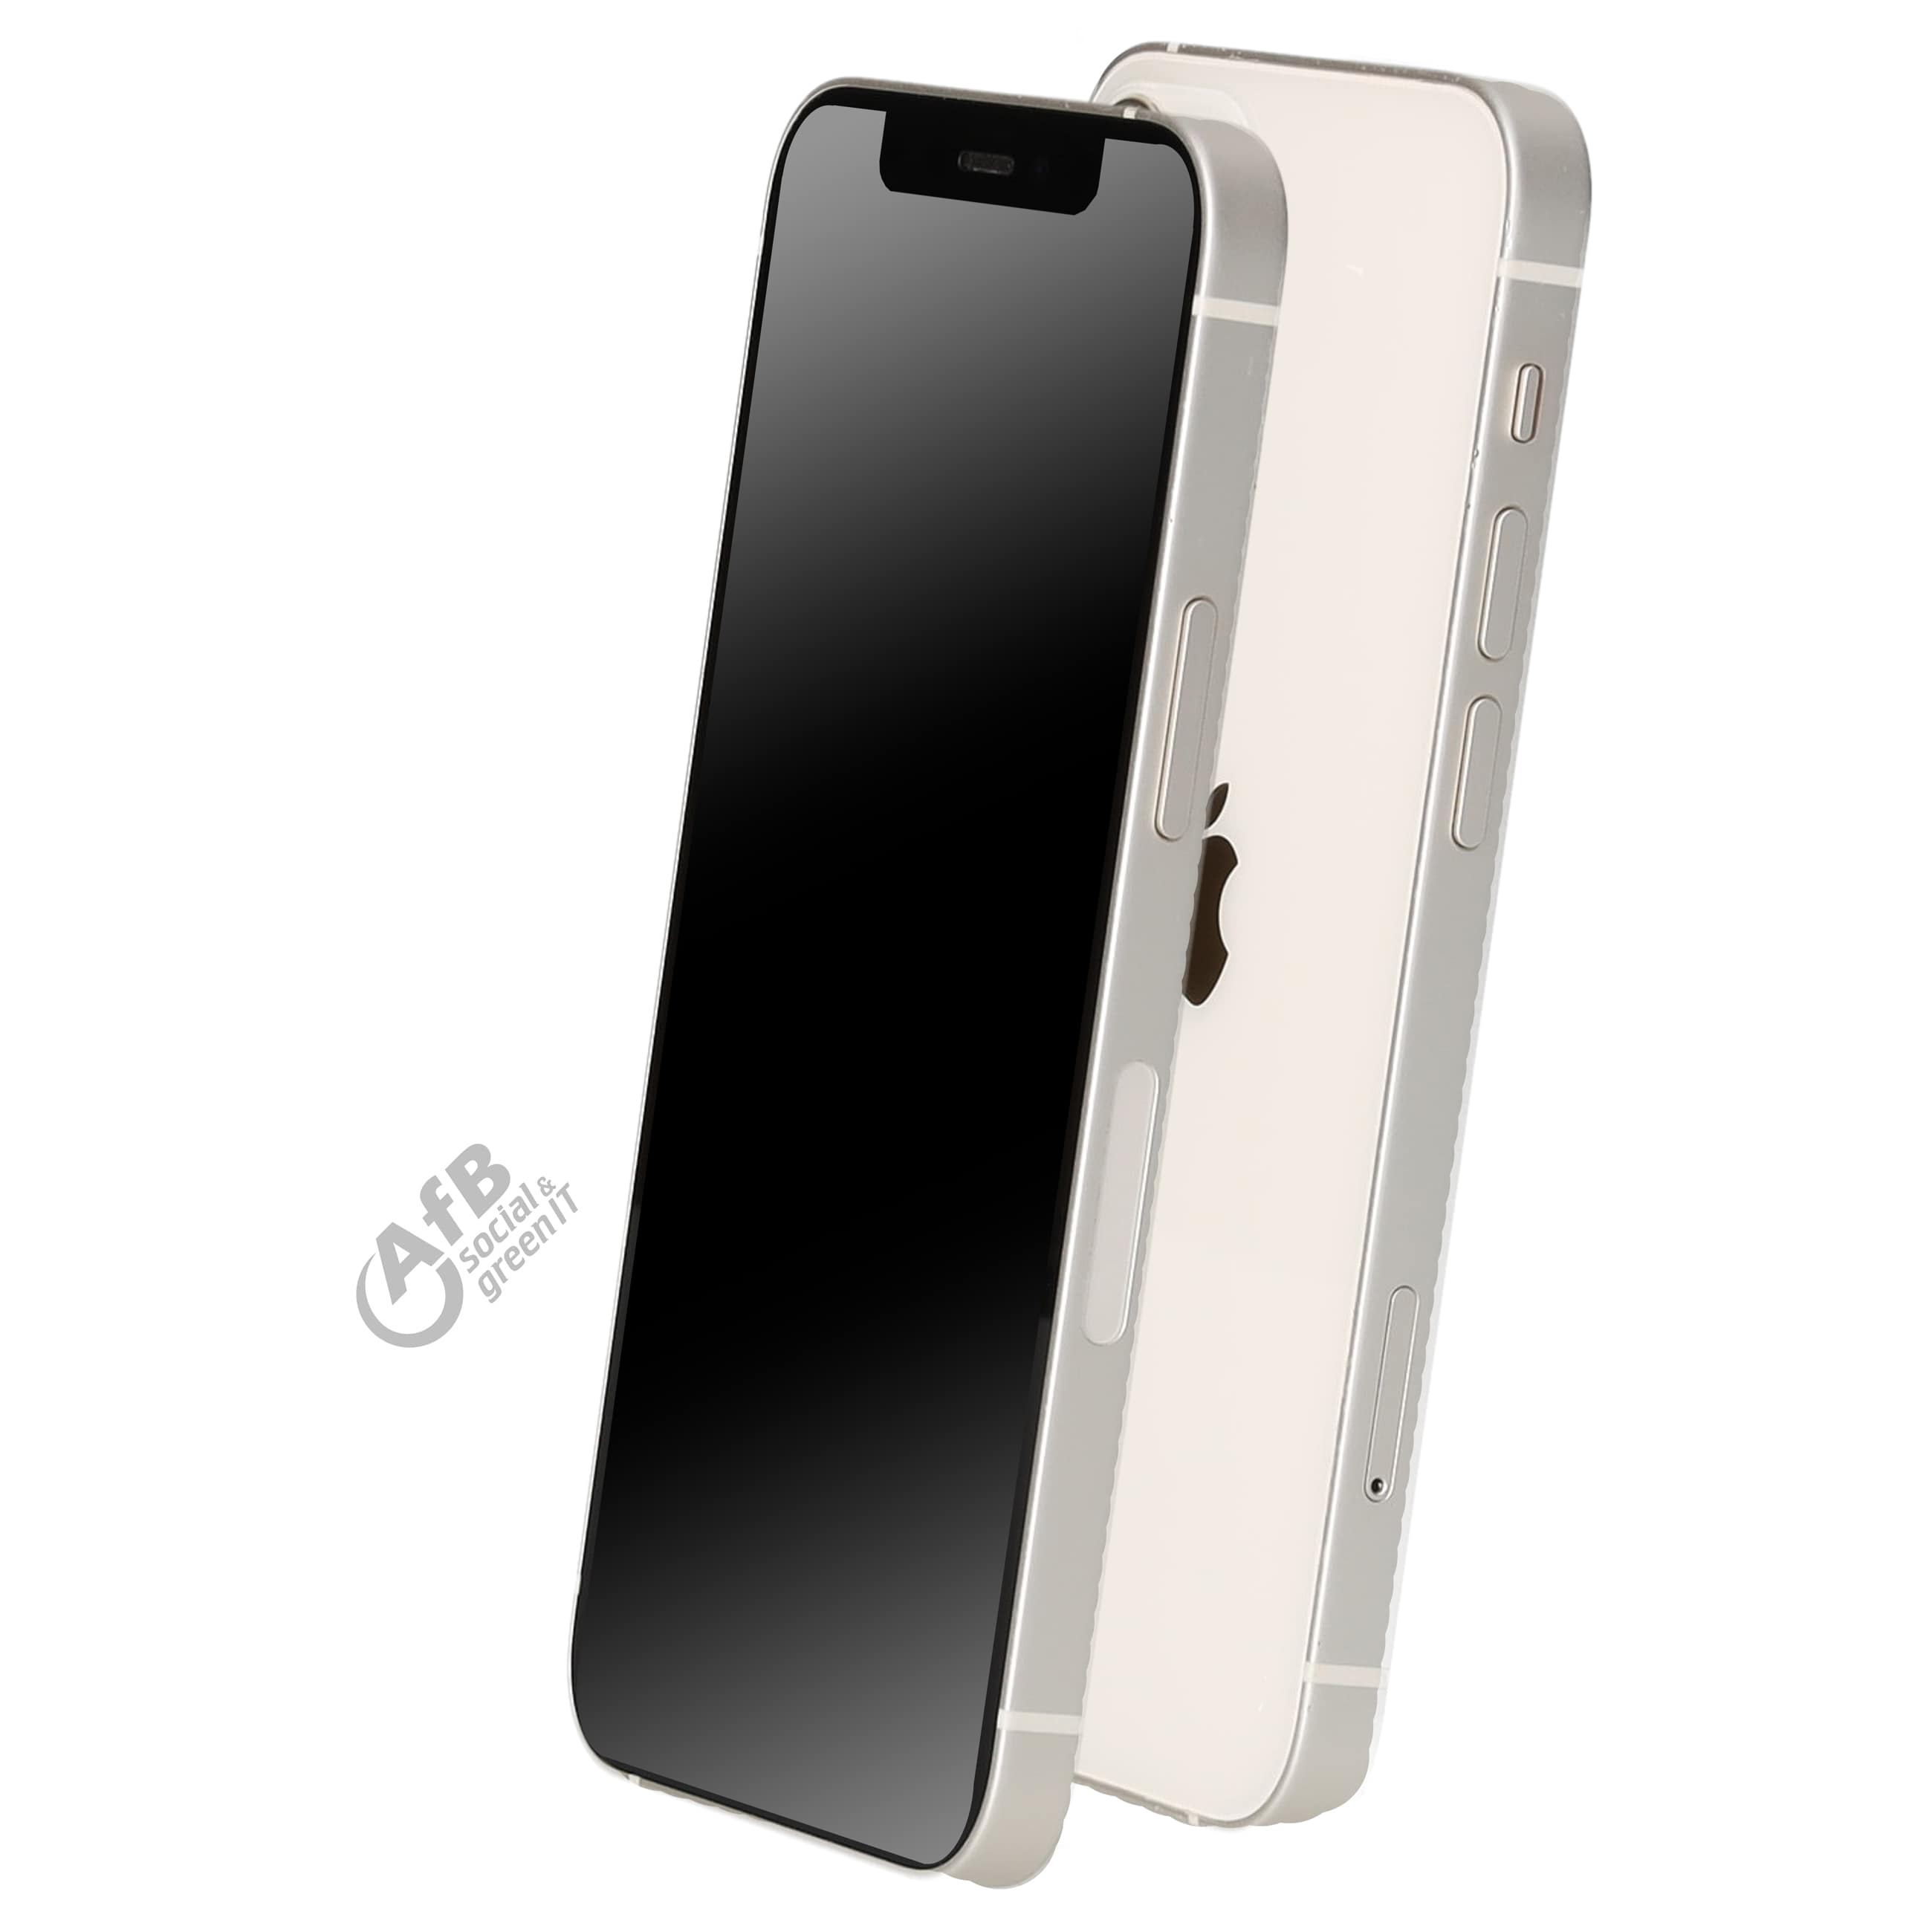 Apple iPhone 12 mini - 64 GB - White